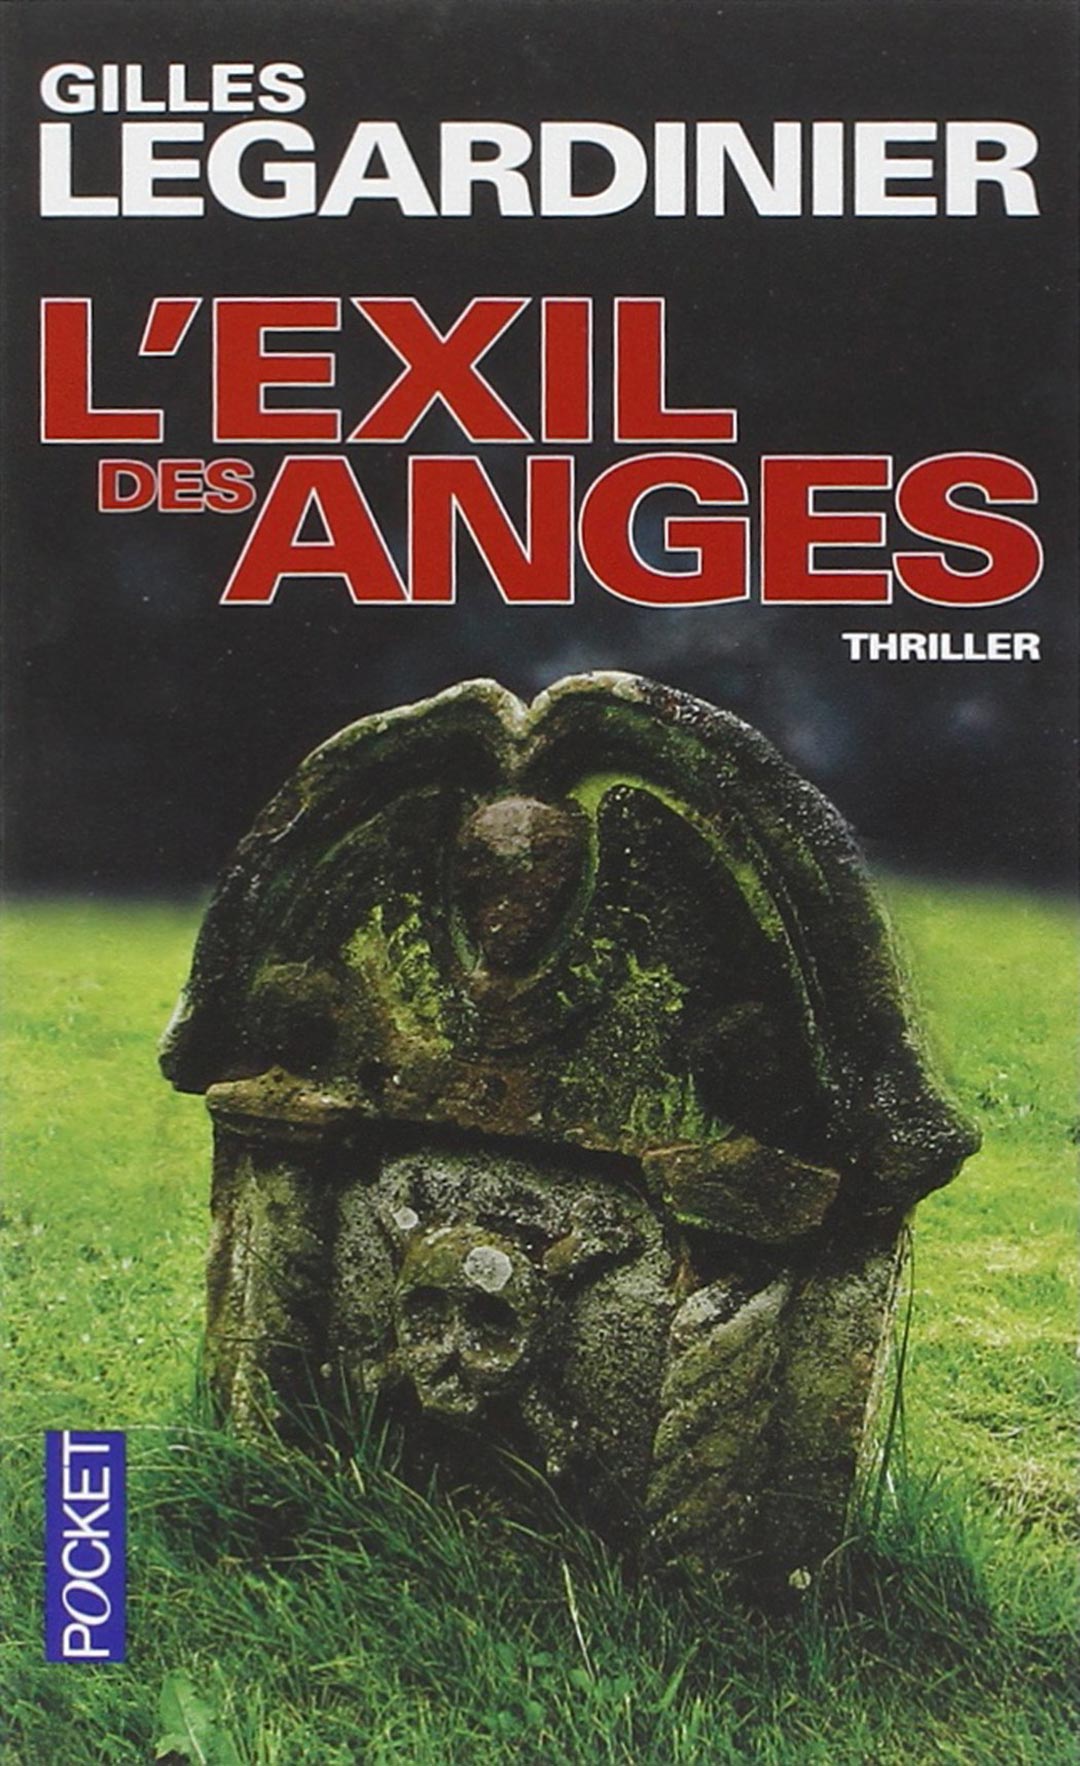 Legardinier Gilles - LExil des Anges скачать бесплатно